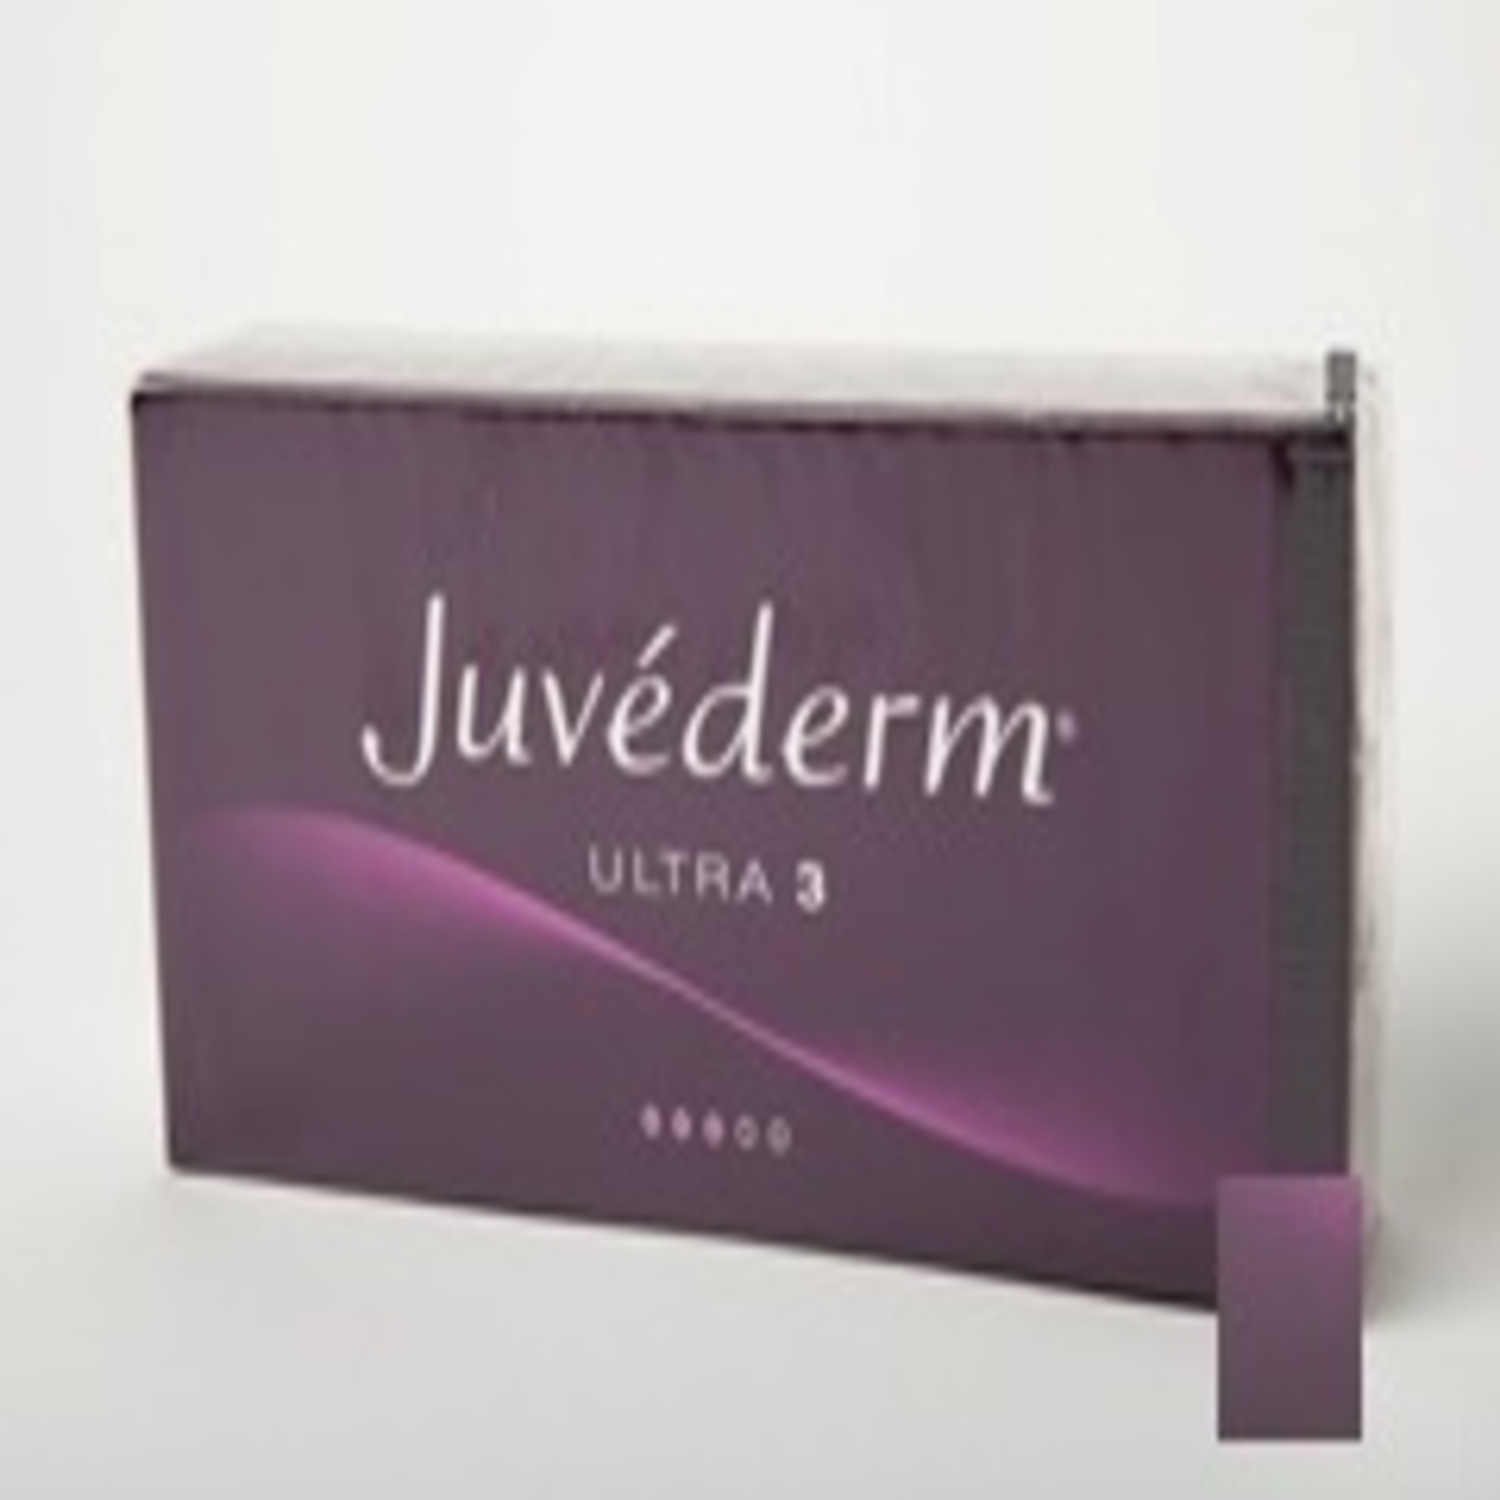 Juvederm Ultra 4 Injection (2x1ml)